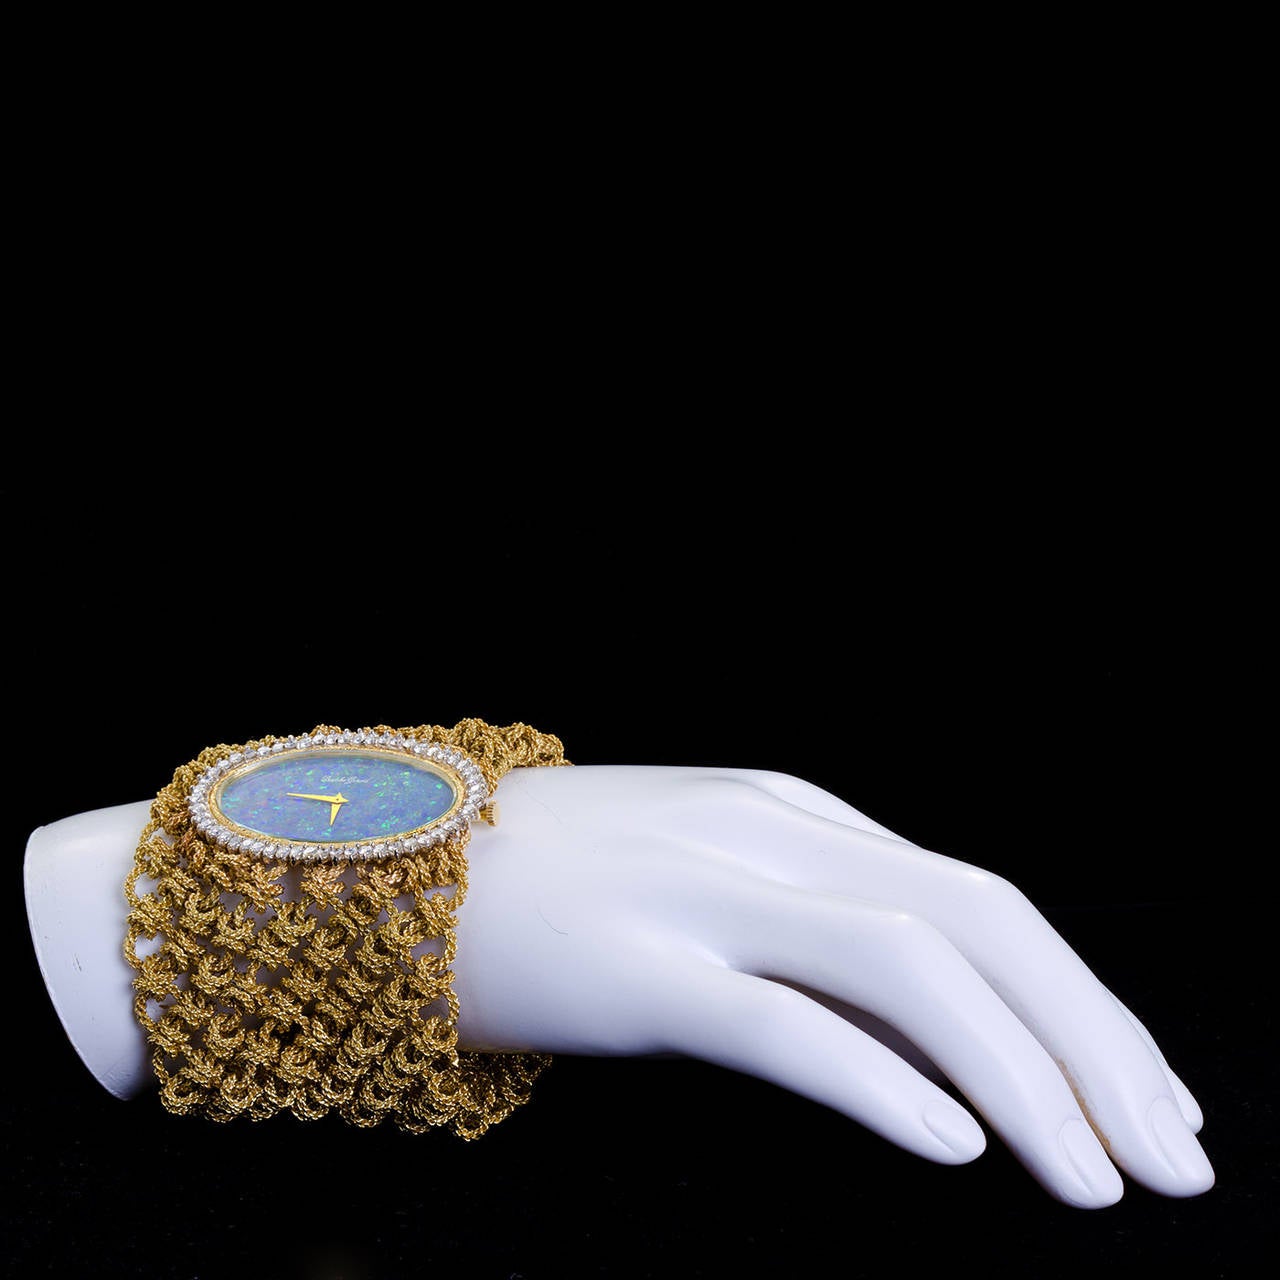 Bueche-Girod lady's 18k yellow gold woven mesh wide bracelet watch with opal dial and diamond bezel. Circa 1970s.

Dealer Ref. No. 6254